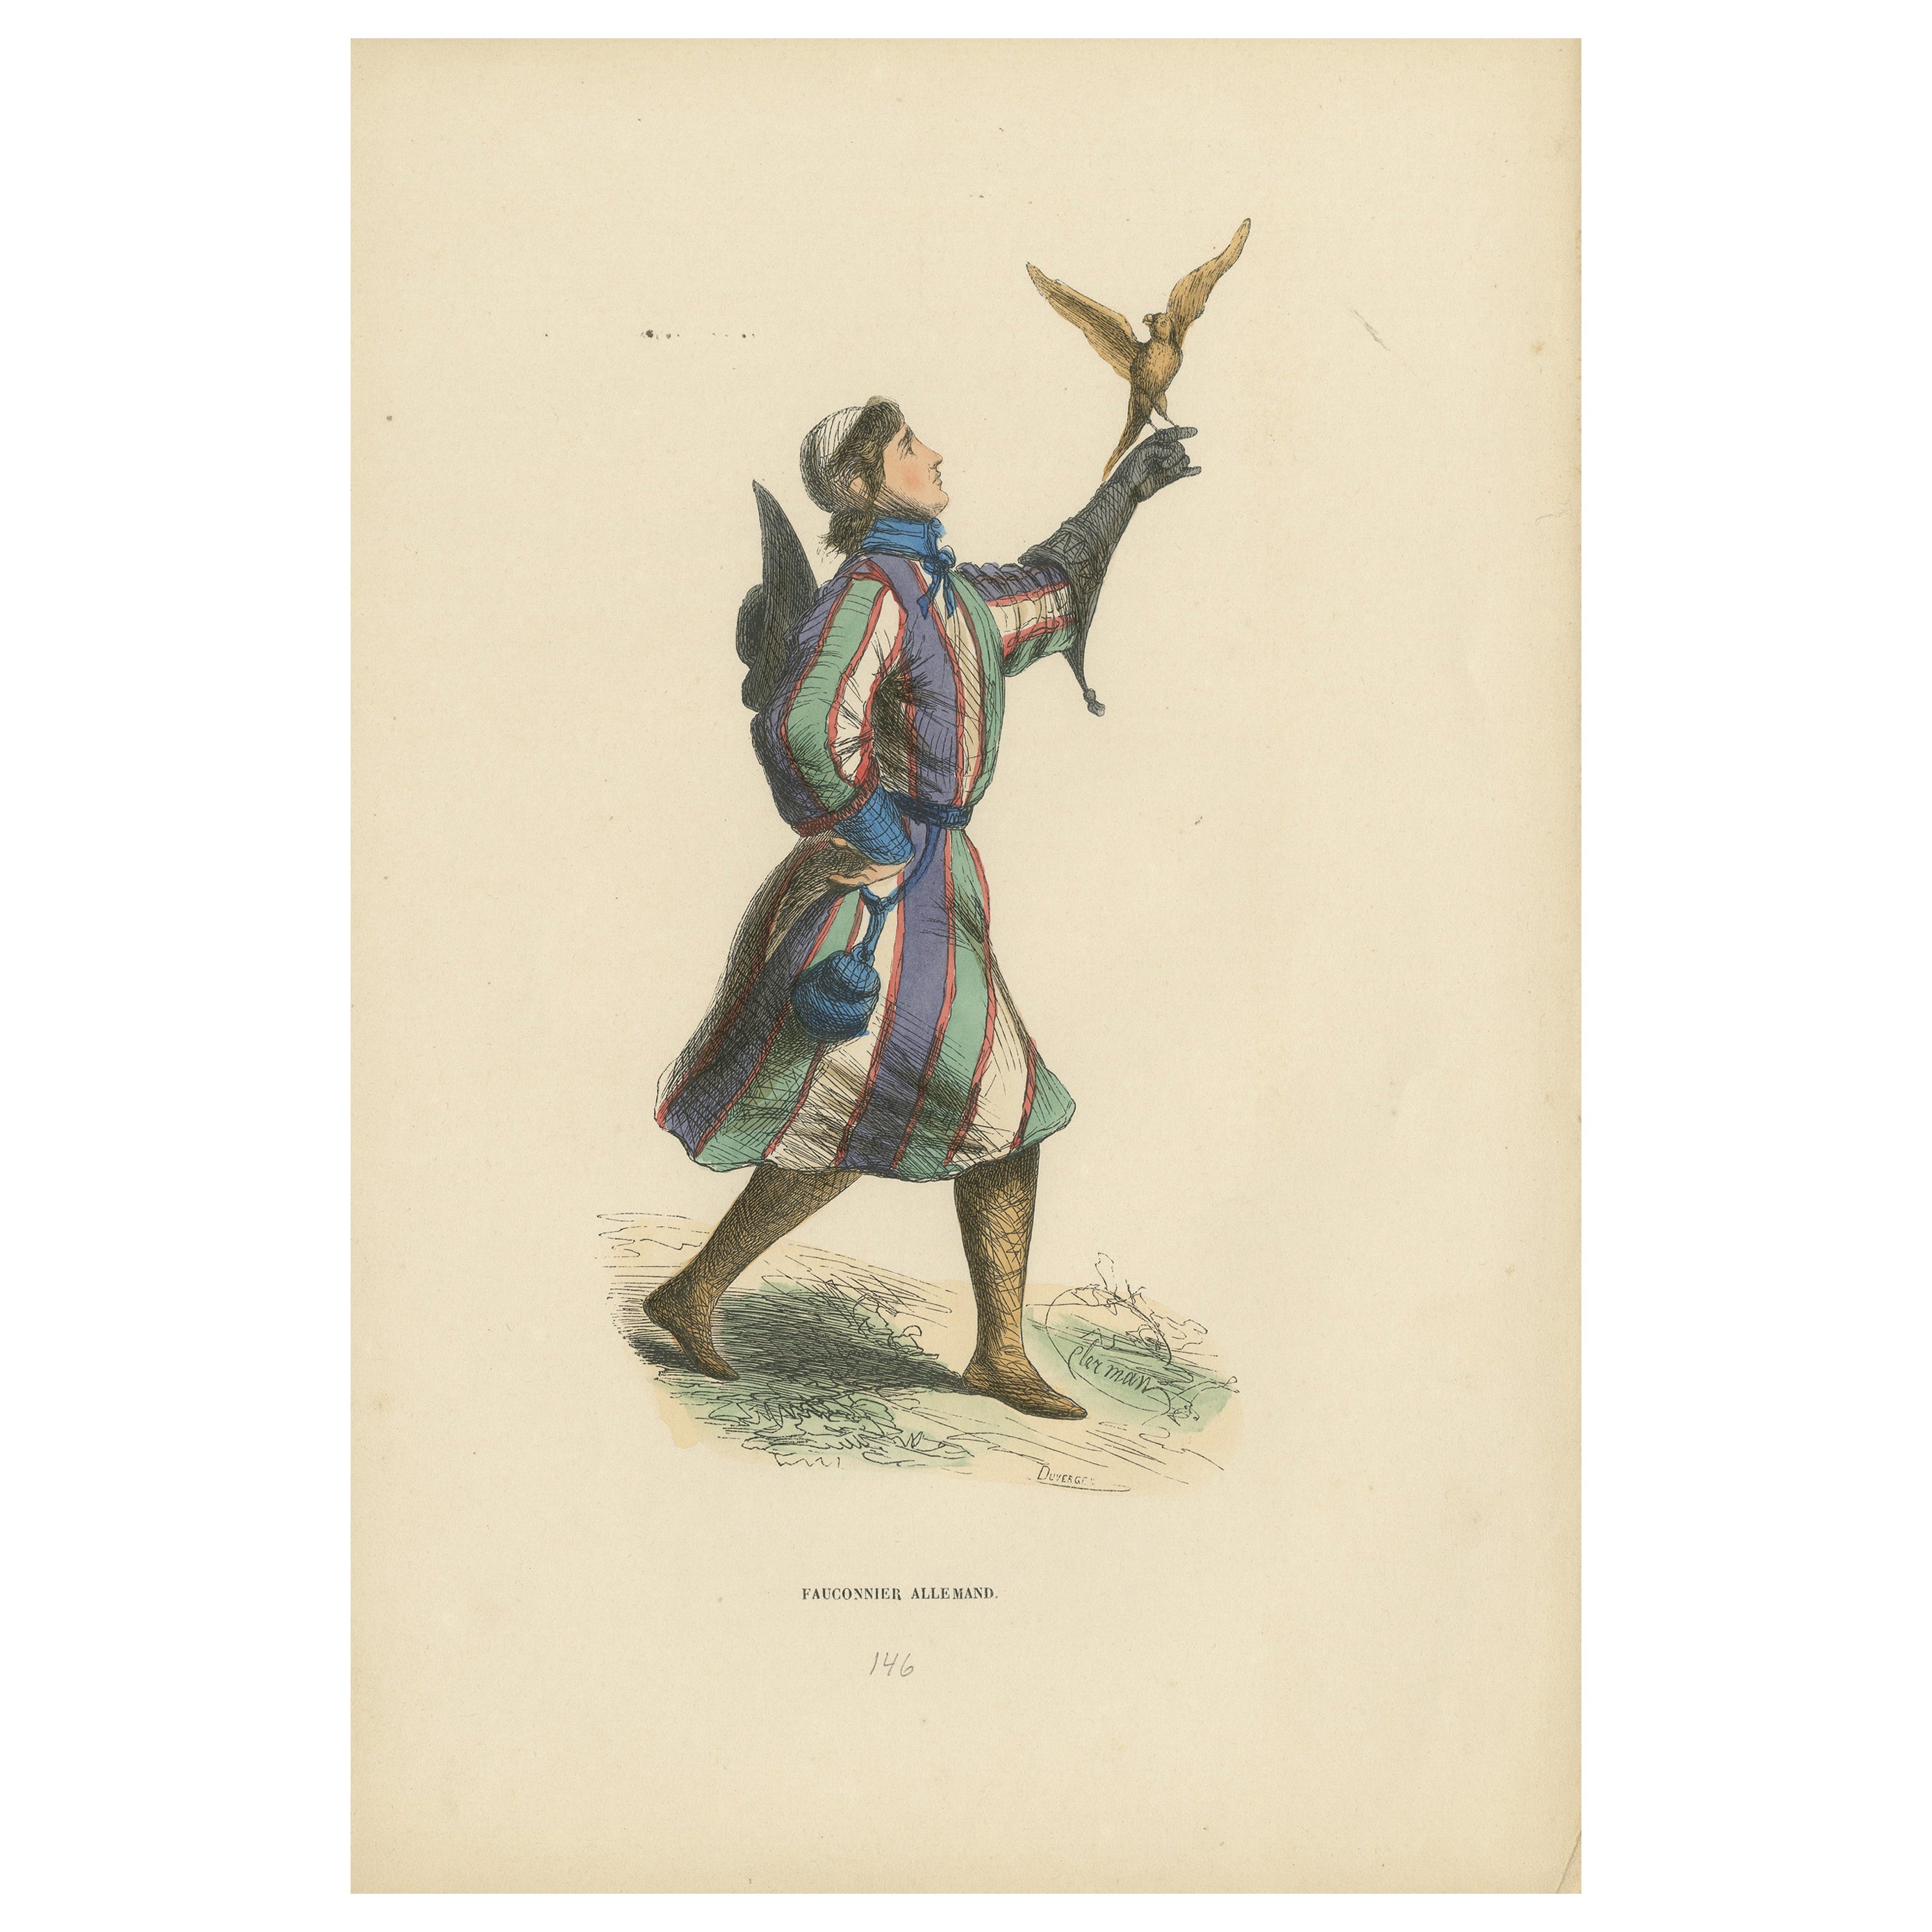 The Noble Sport: A German Falconer in 'Costume du Moyen Âge, 1847